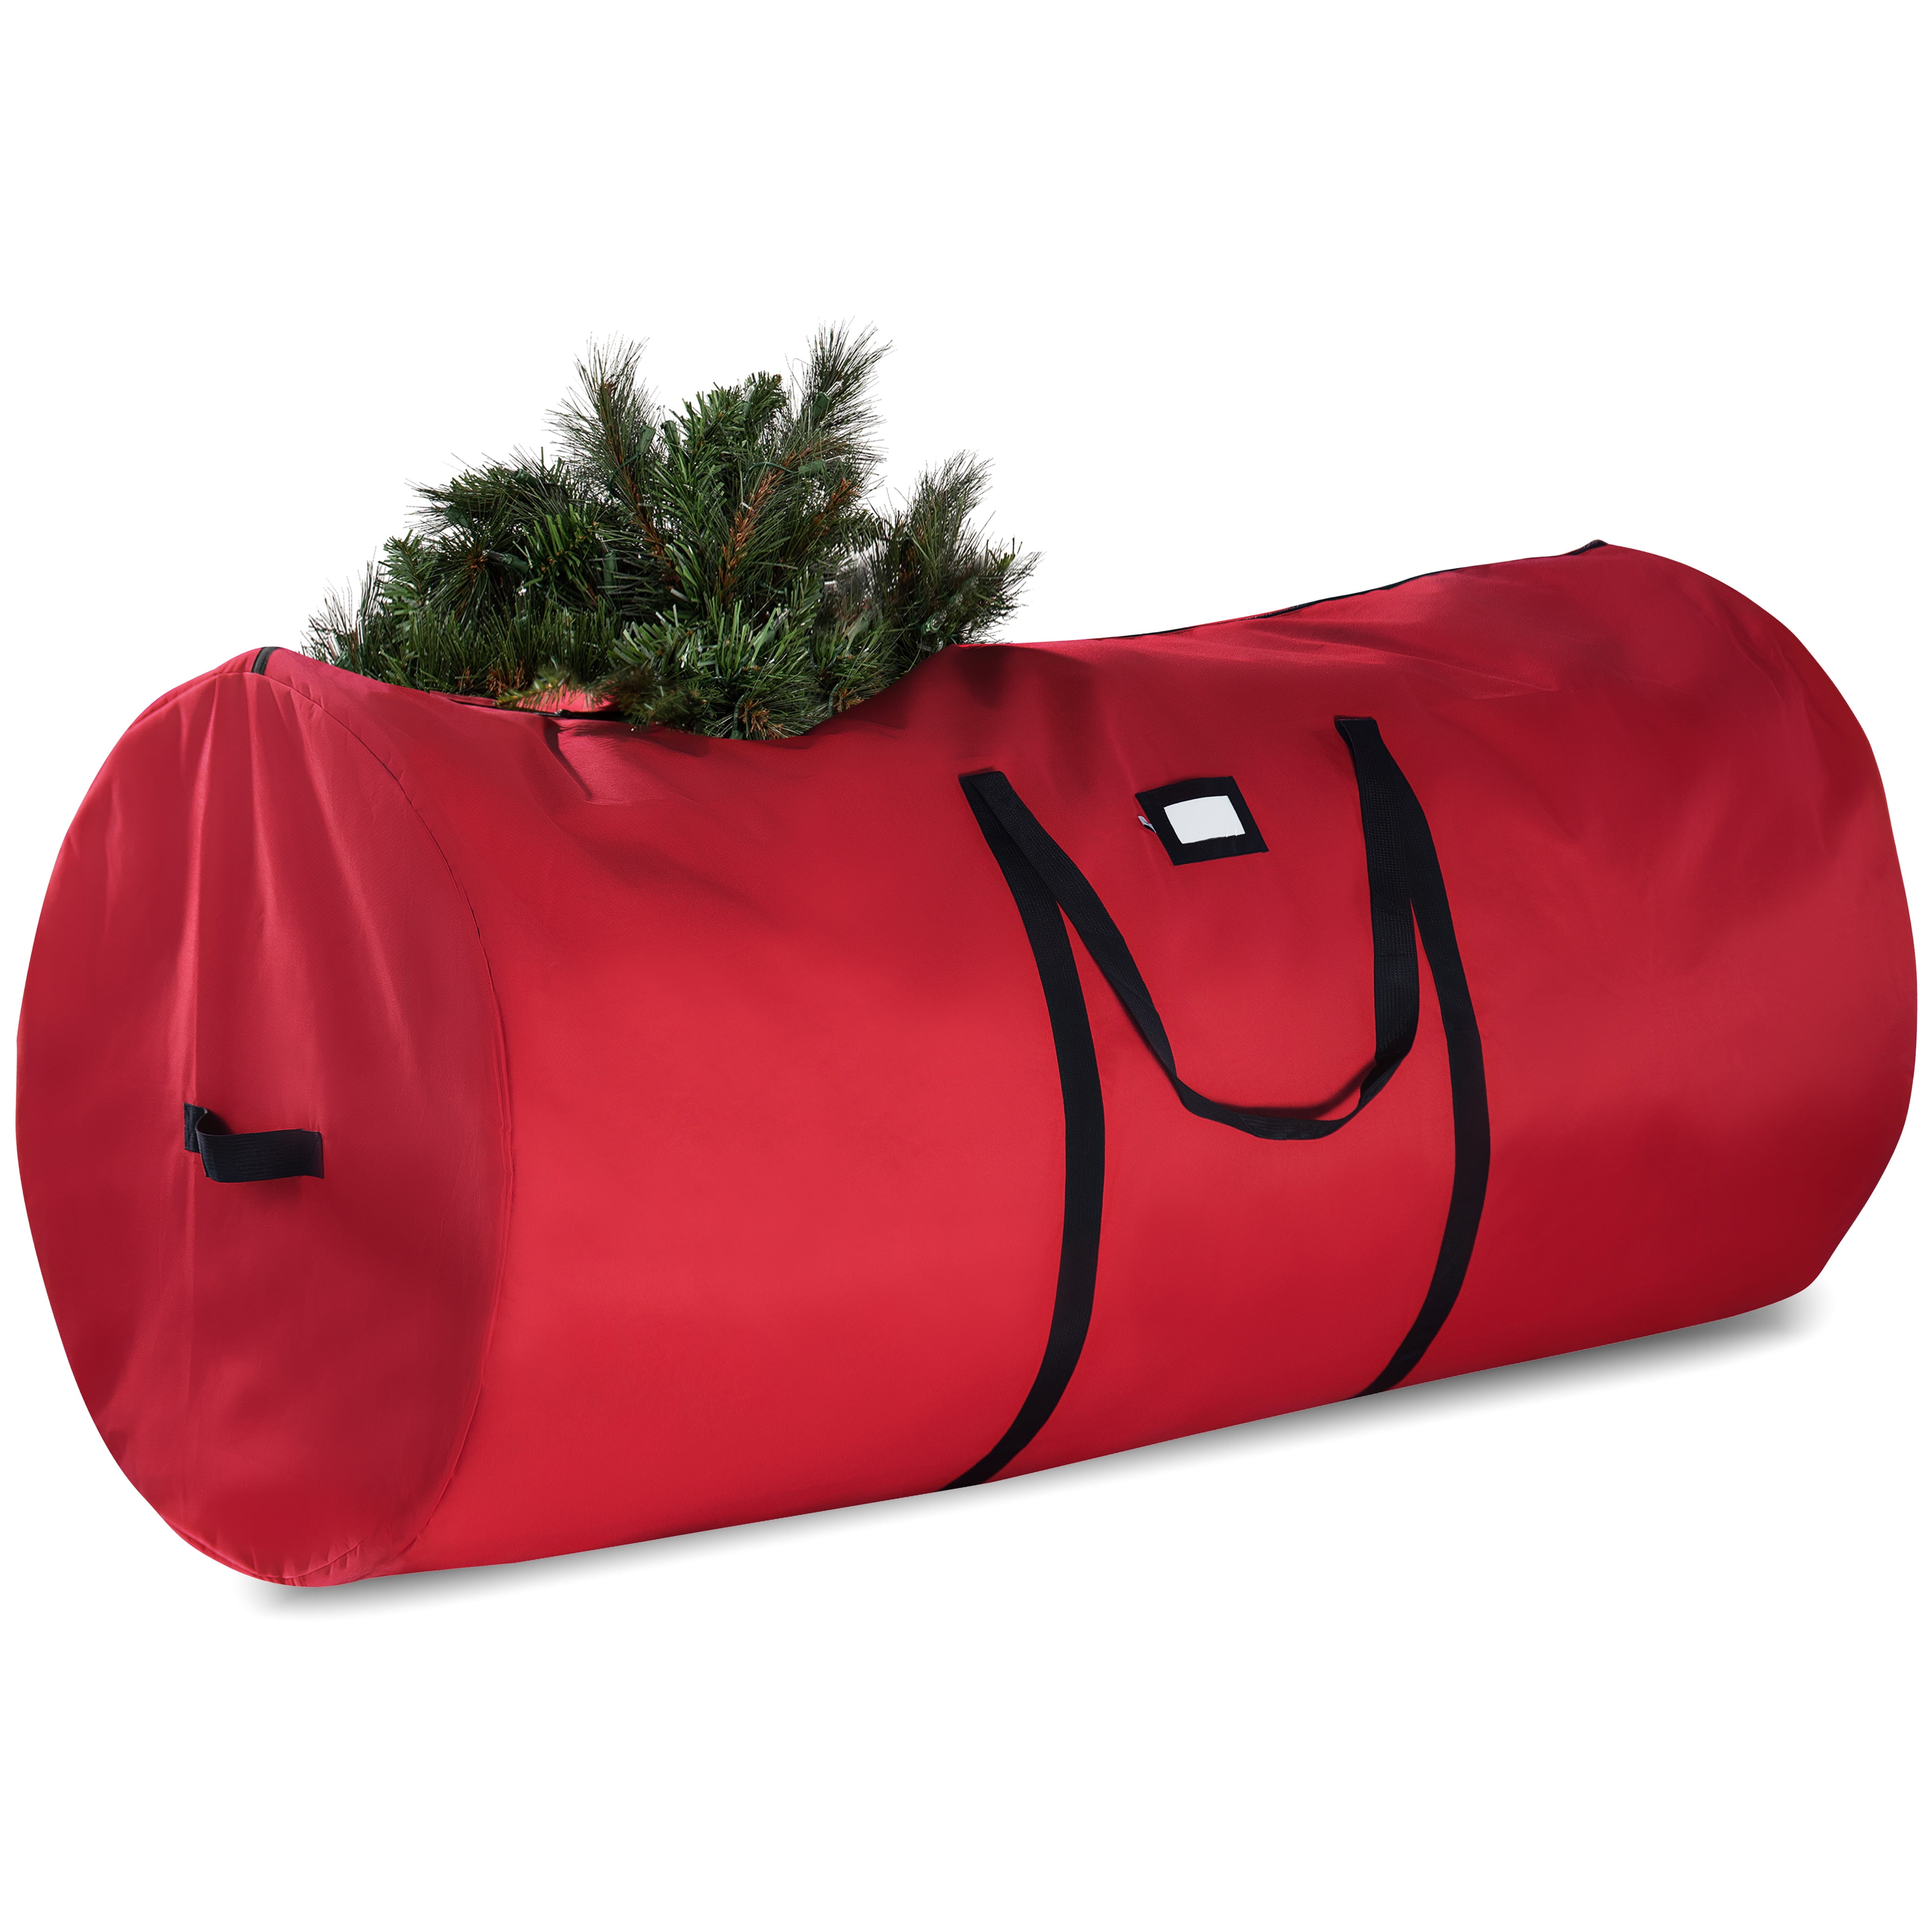 Stores a 9-Foot Disassembled Artificial Xmas Holida Christmas Tree Storage Bag 